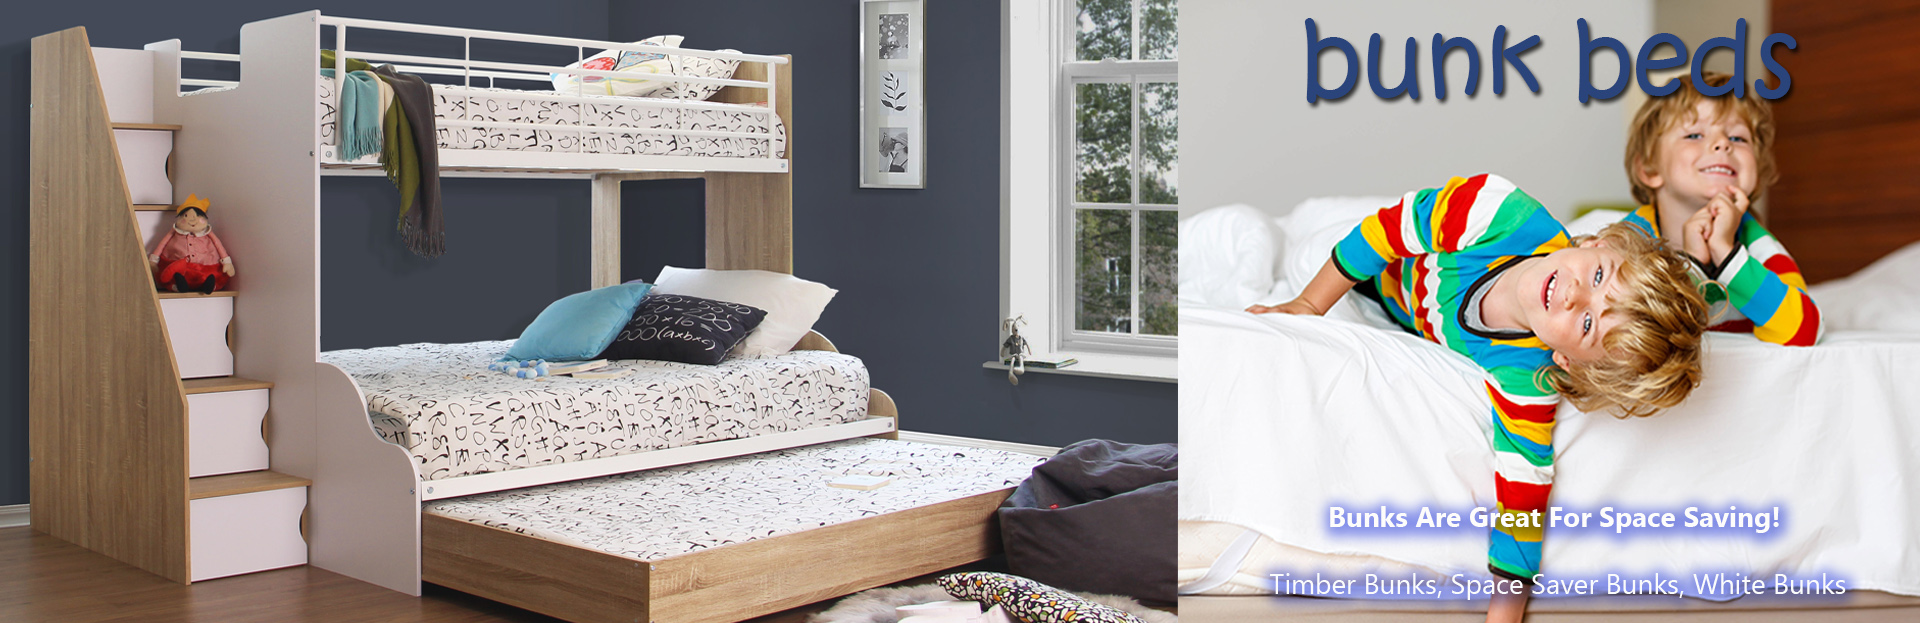 Single Top Double base bed Detachable Bunk Beds Hostel Furniture Solid Wood Frame |Childrens Bed room Furniture Wooden Bed Frame Bed Sets Adjustable Beds 